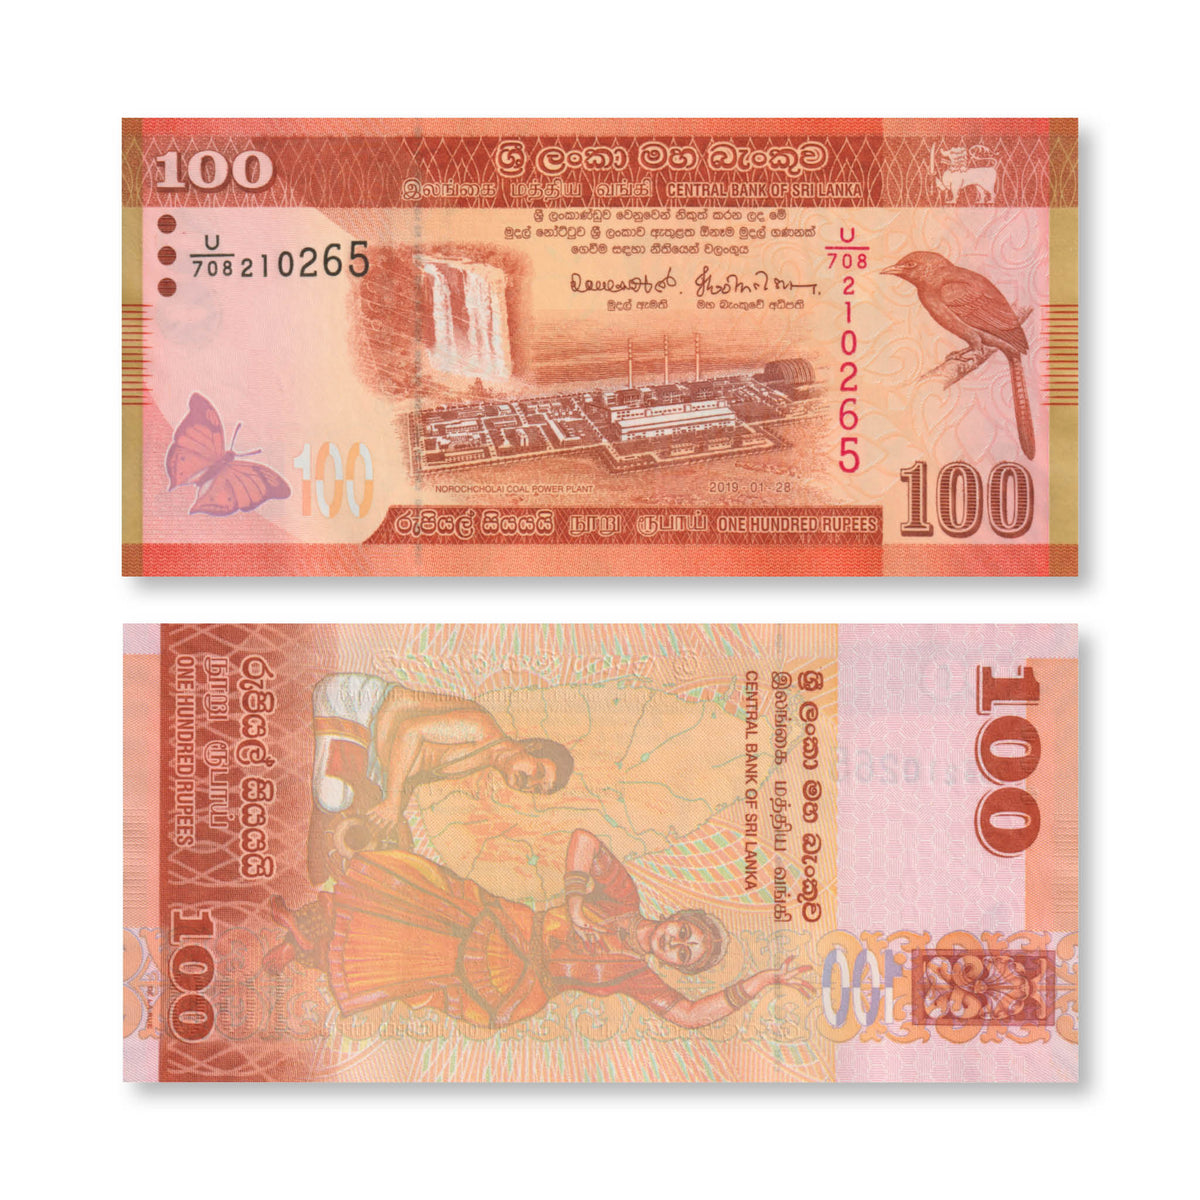 Sri Lanka 100 Rupees, 2016, B125c, P125e, UNC - Robert's World Money - World Banknotes